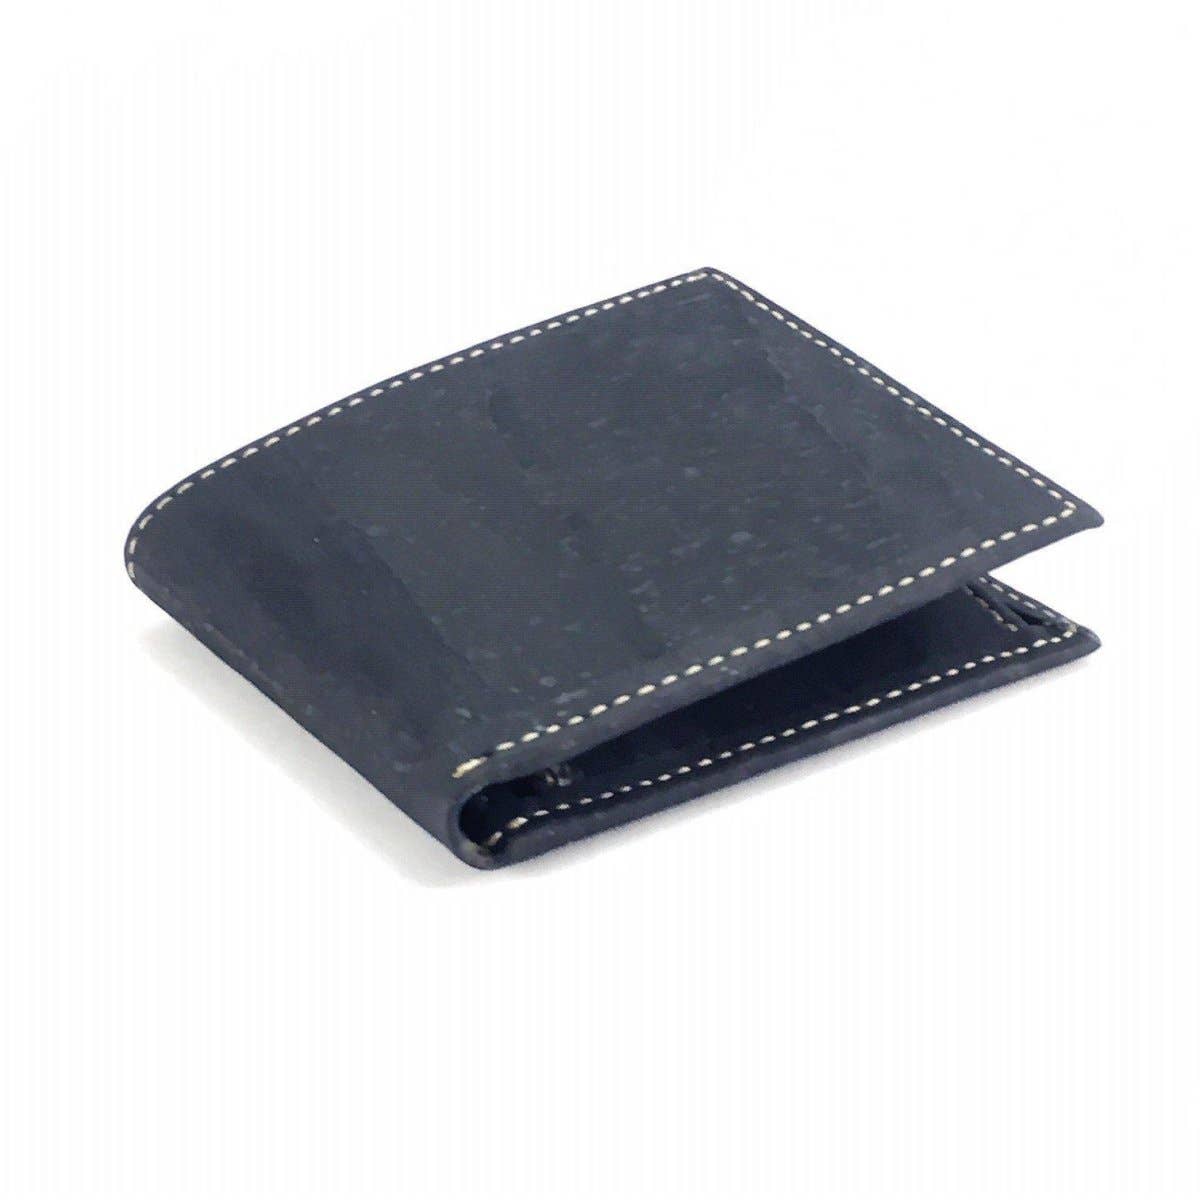 Slim Cork Wallet Minimalist Vegan Wallet with Coin Pocket in Black